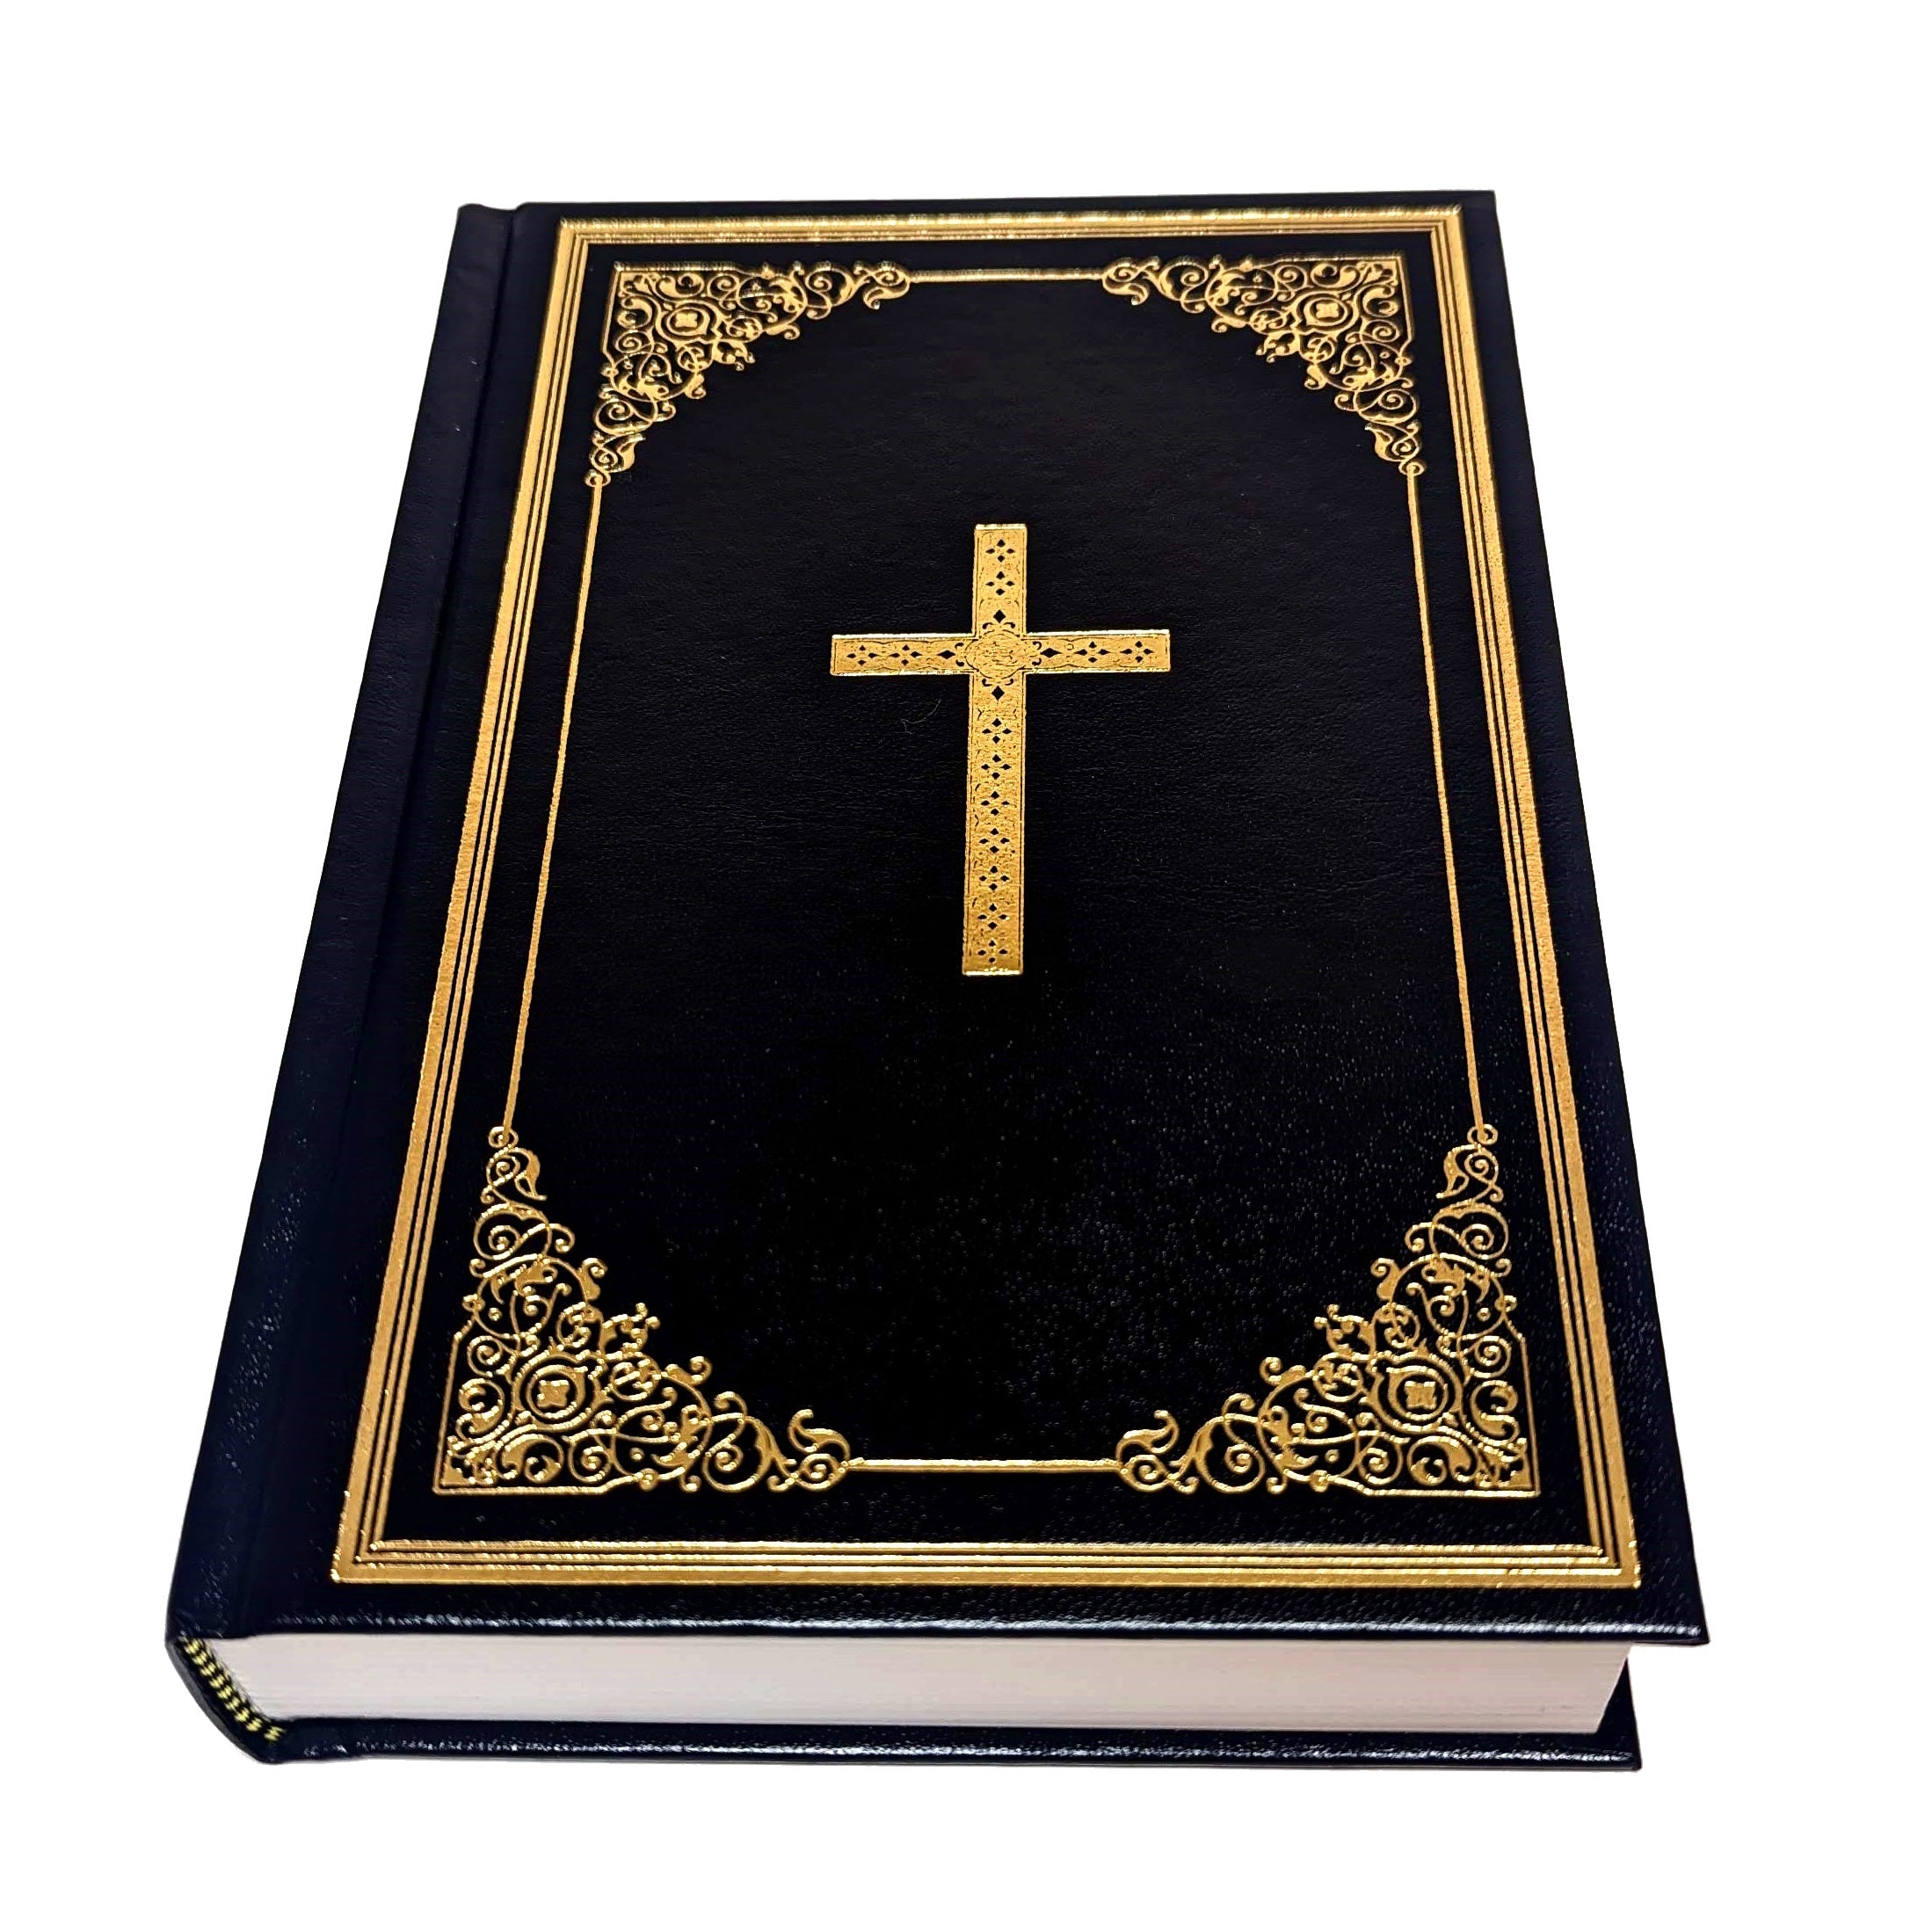 Douay Rheims Catholic Bible (Hard cover)